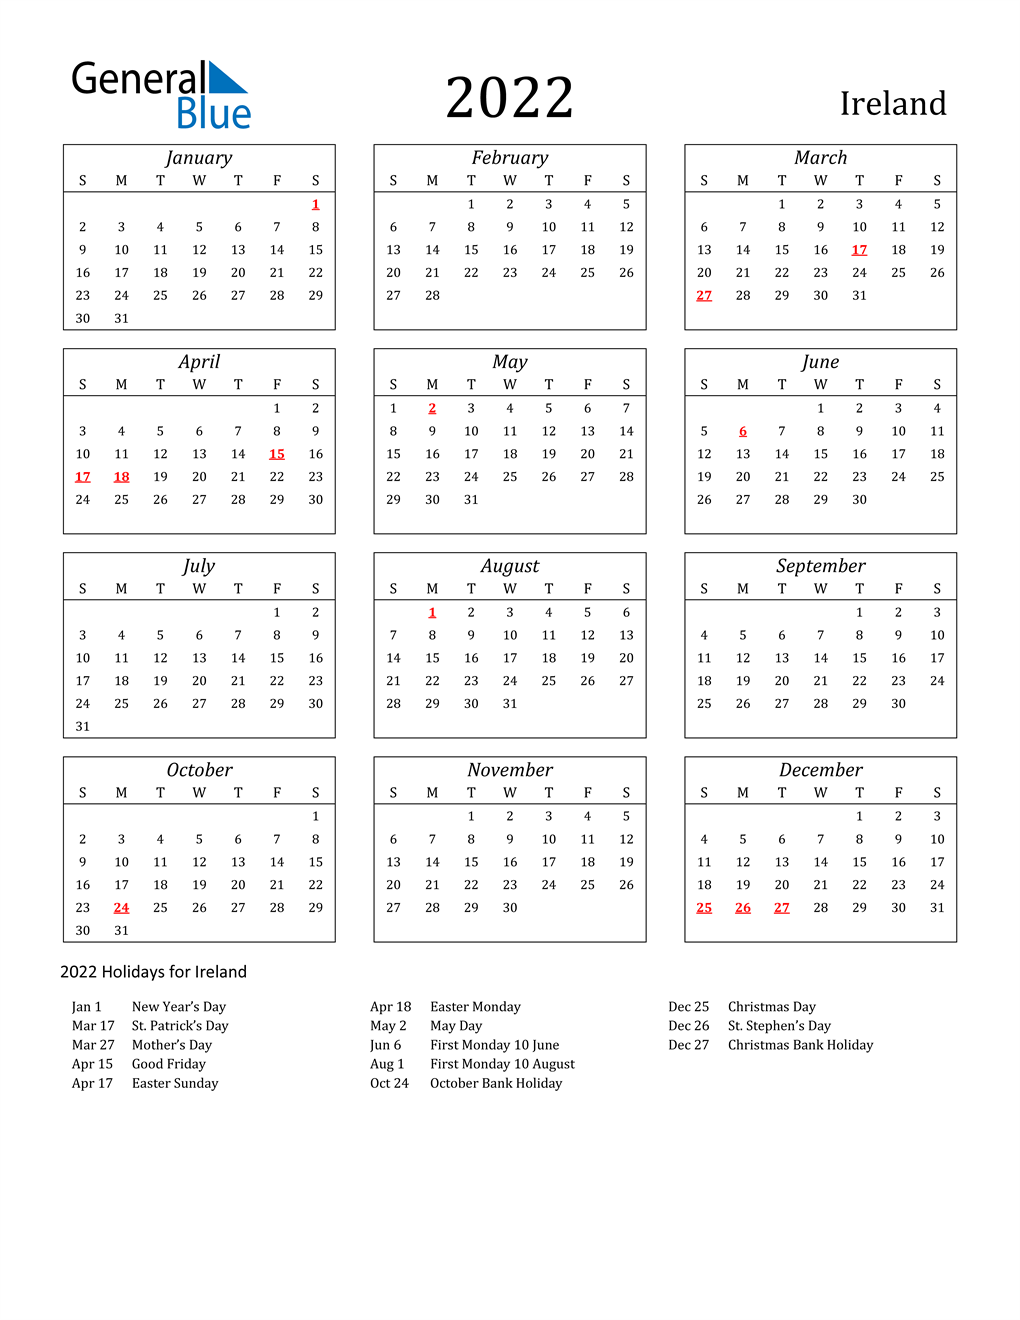 Irl 2022 Schedule 2022 Ireland Calendar With Holidays